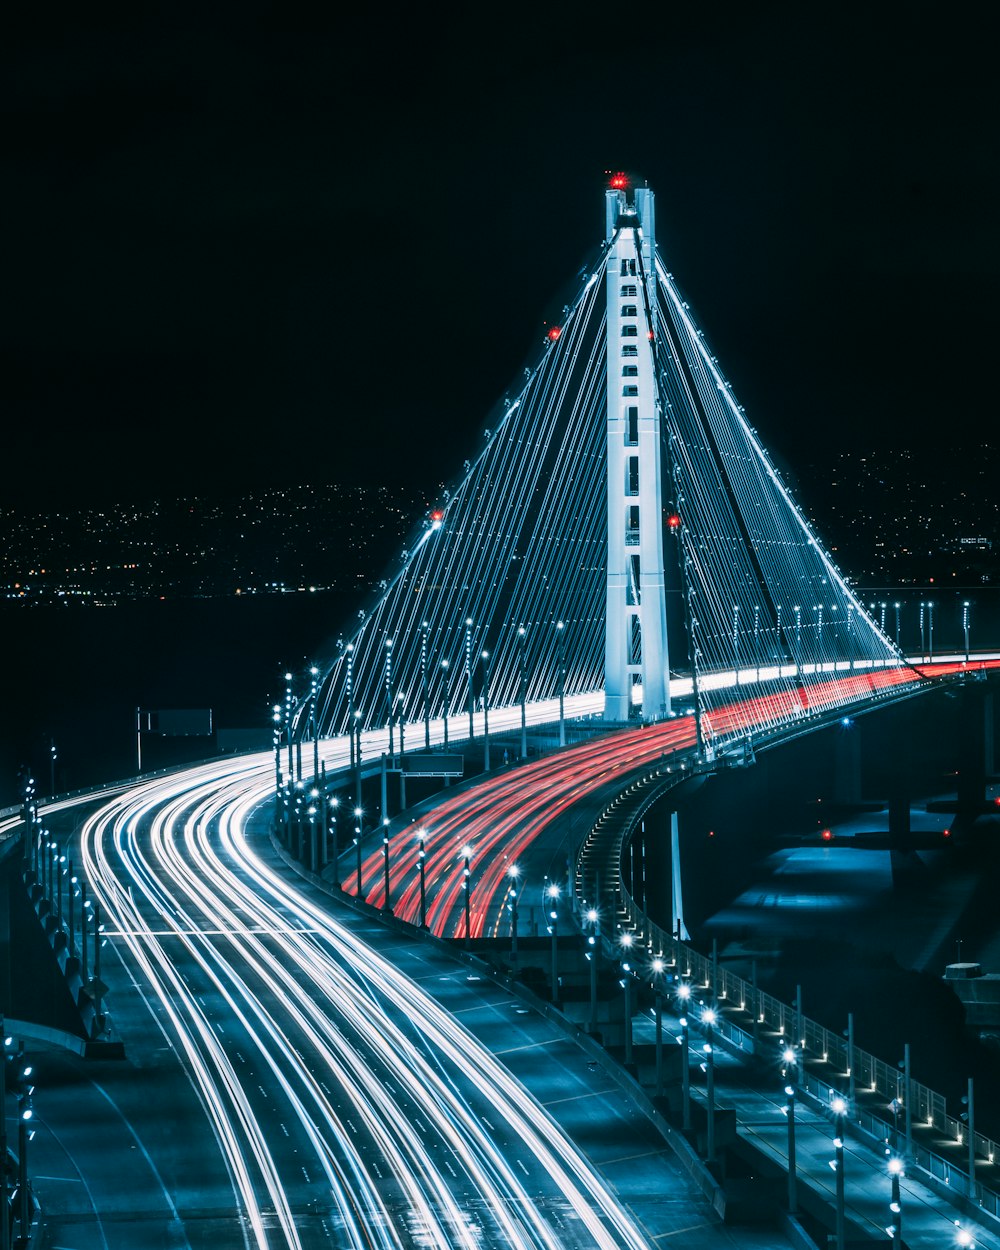 San Francisco bridge during night time photo – Free Hd wallpapers Image on  Unsplash